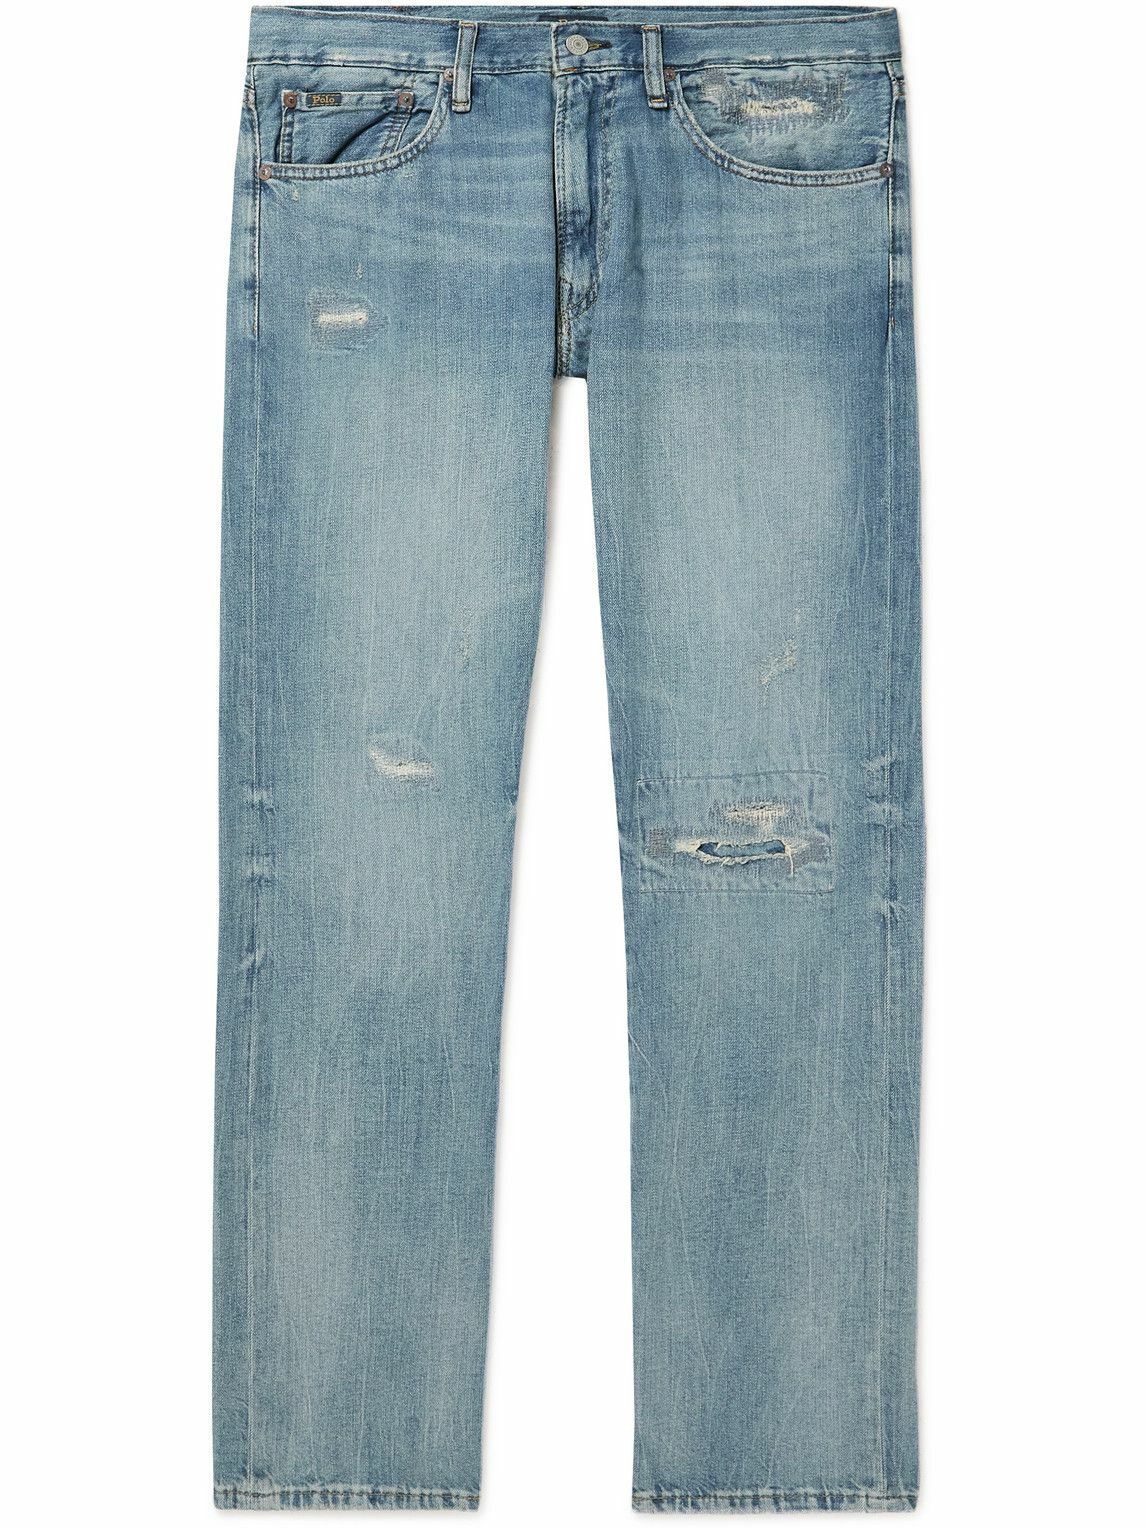 Polo Ralph Lauren - Slim-Fit Distressed Jeans - Blue